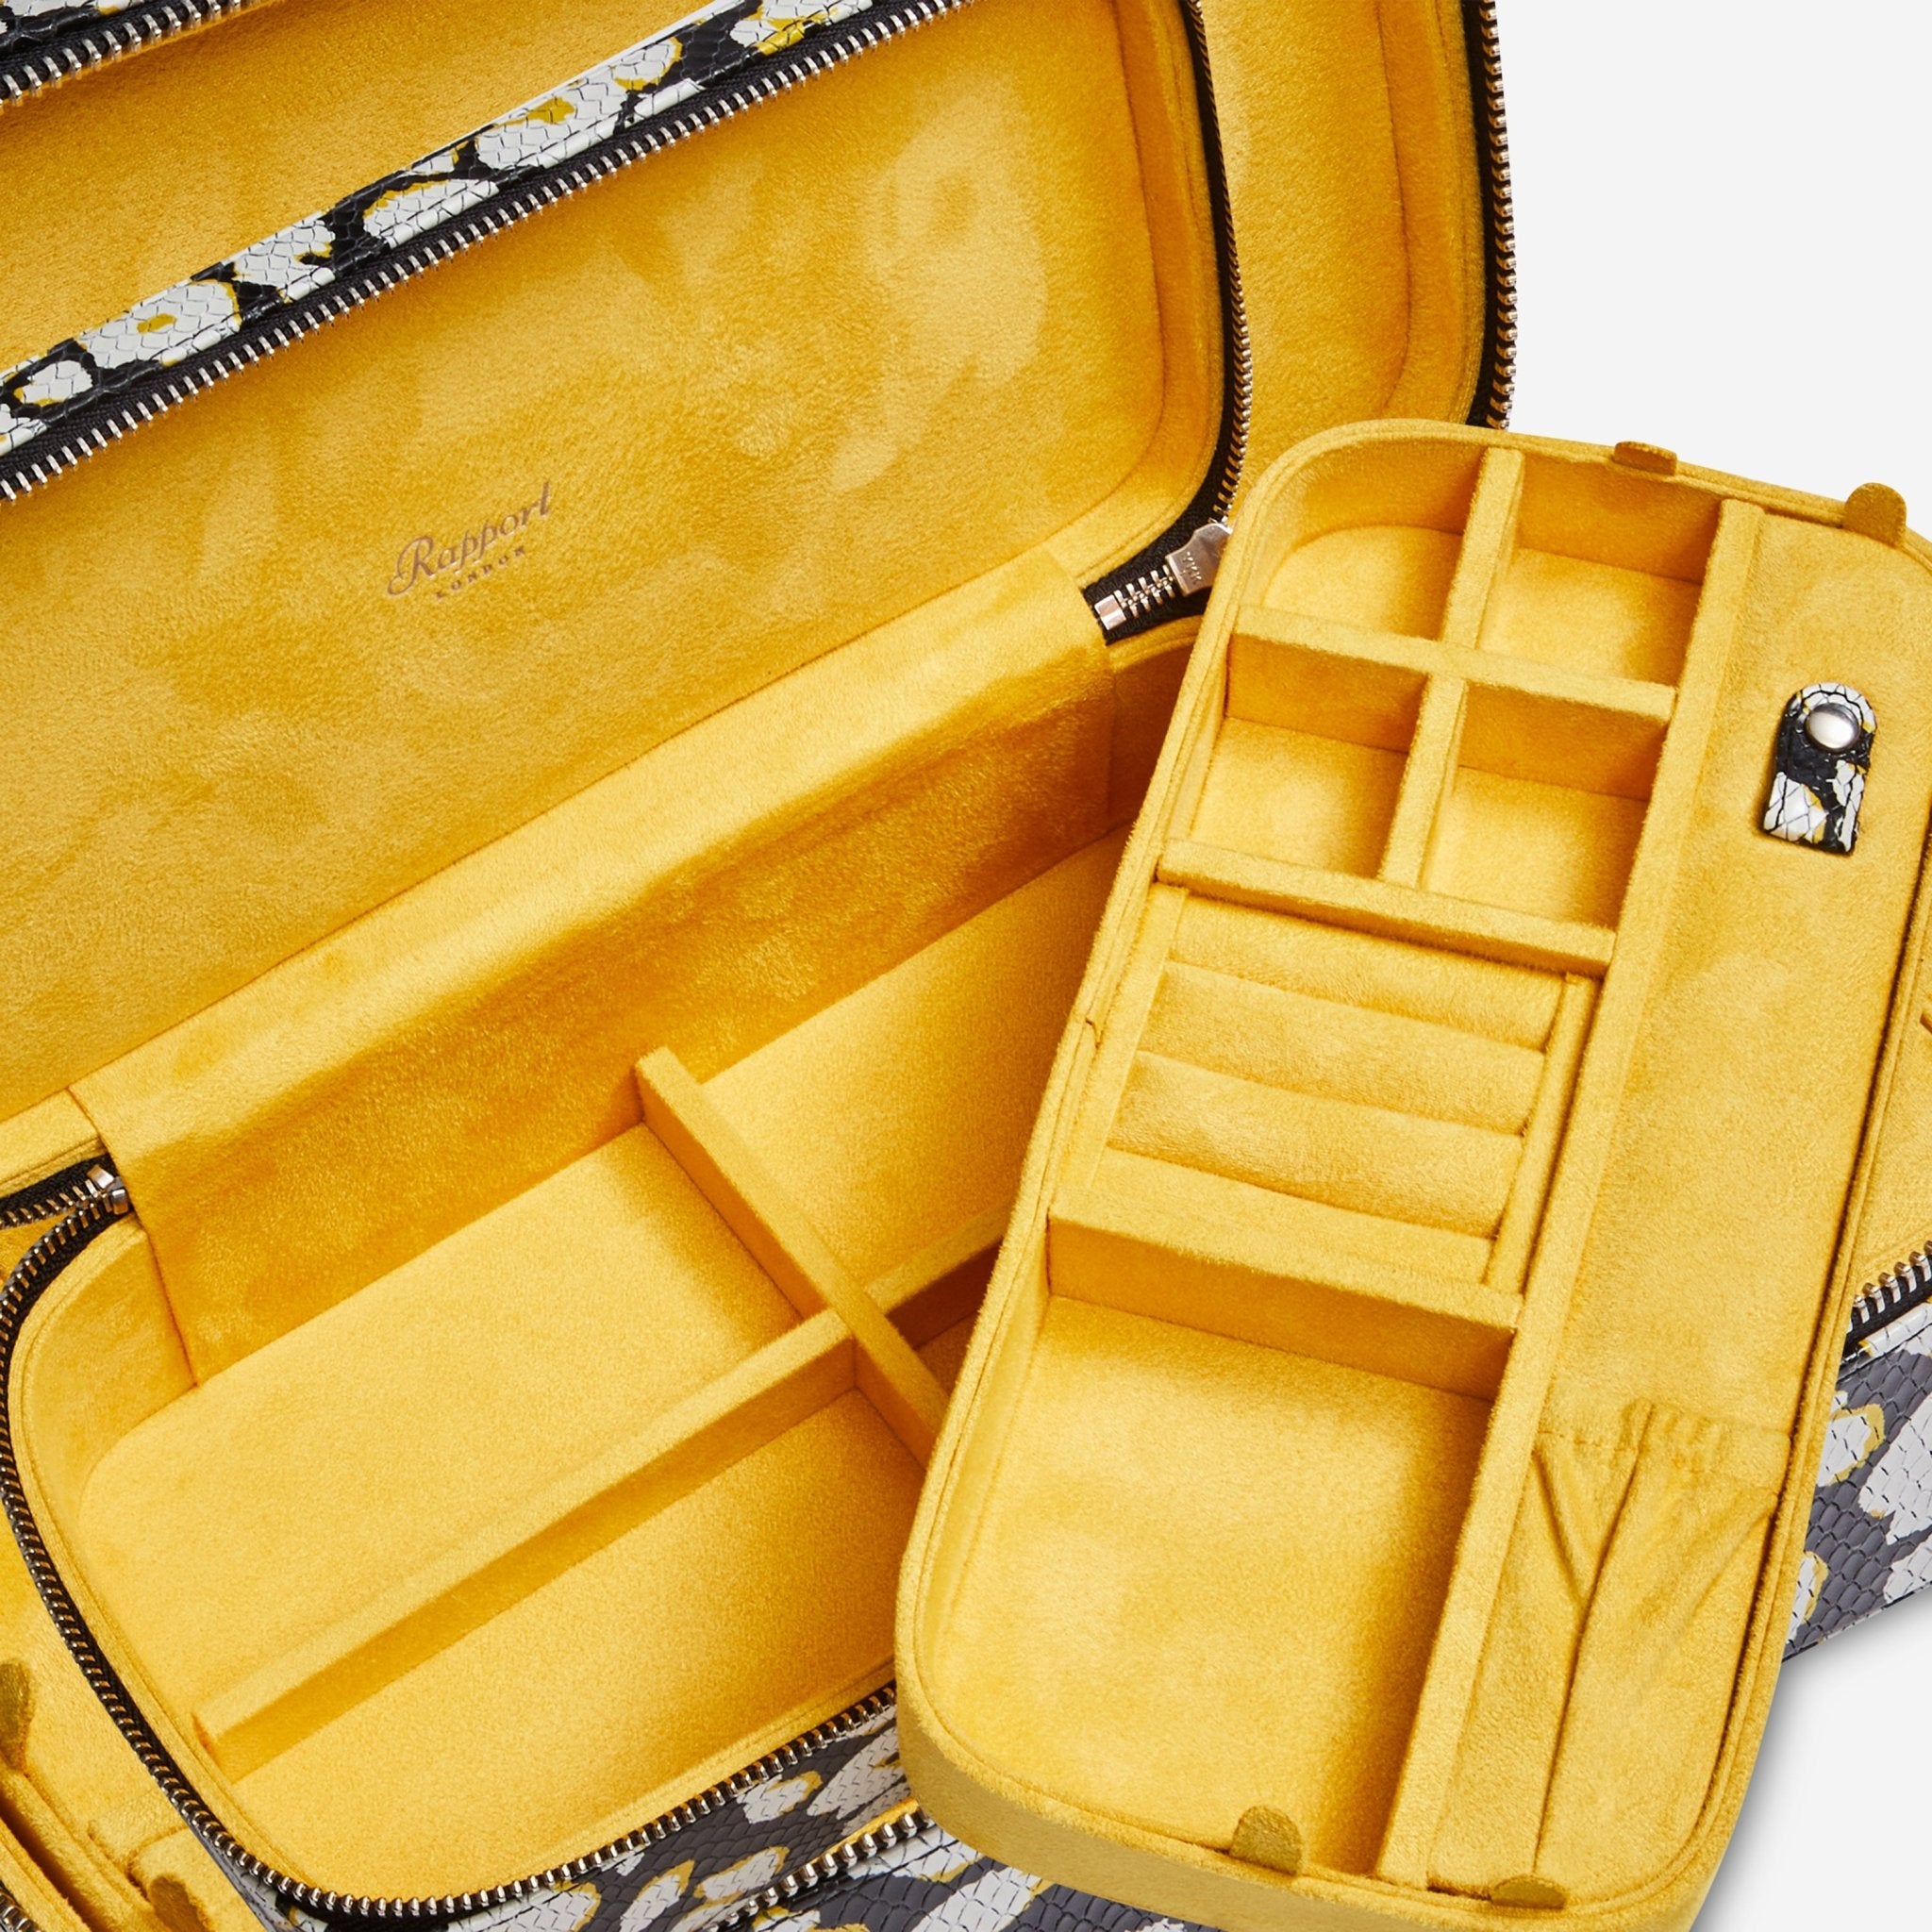 Rapport London Sloane Citrus Textured Leather Jewellery Zip Case J176 - THE SOLIST - Rapport